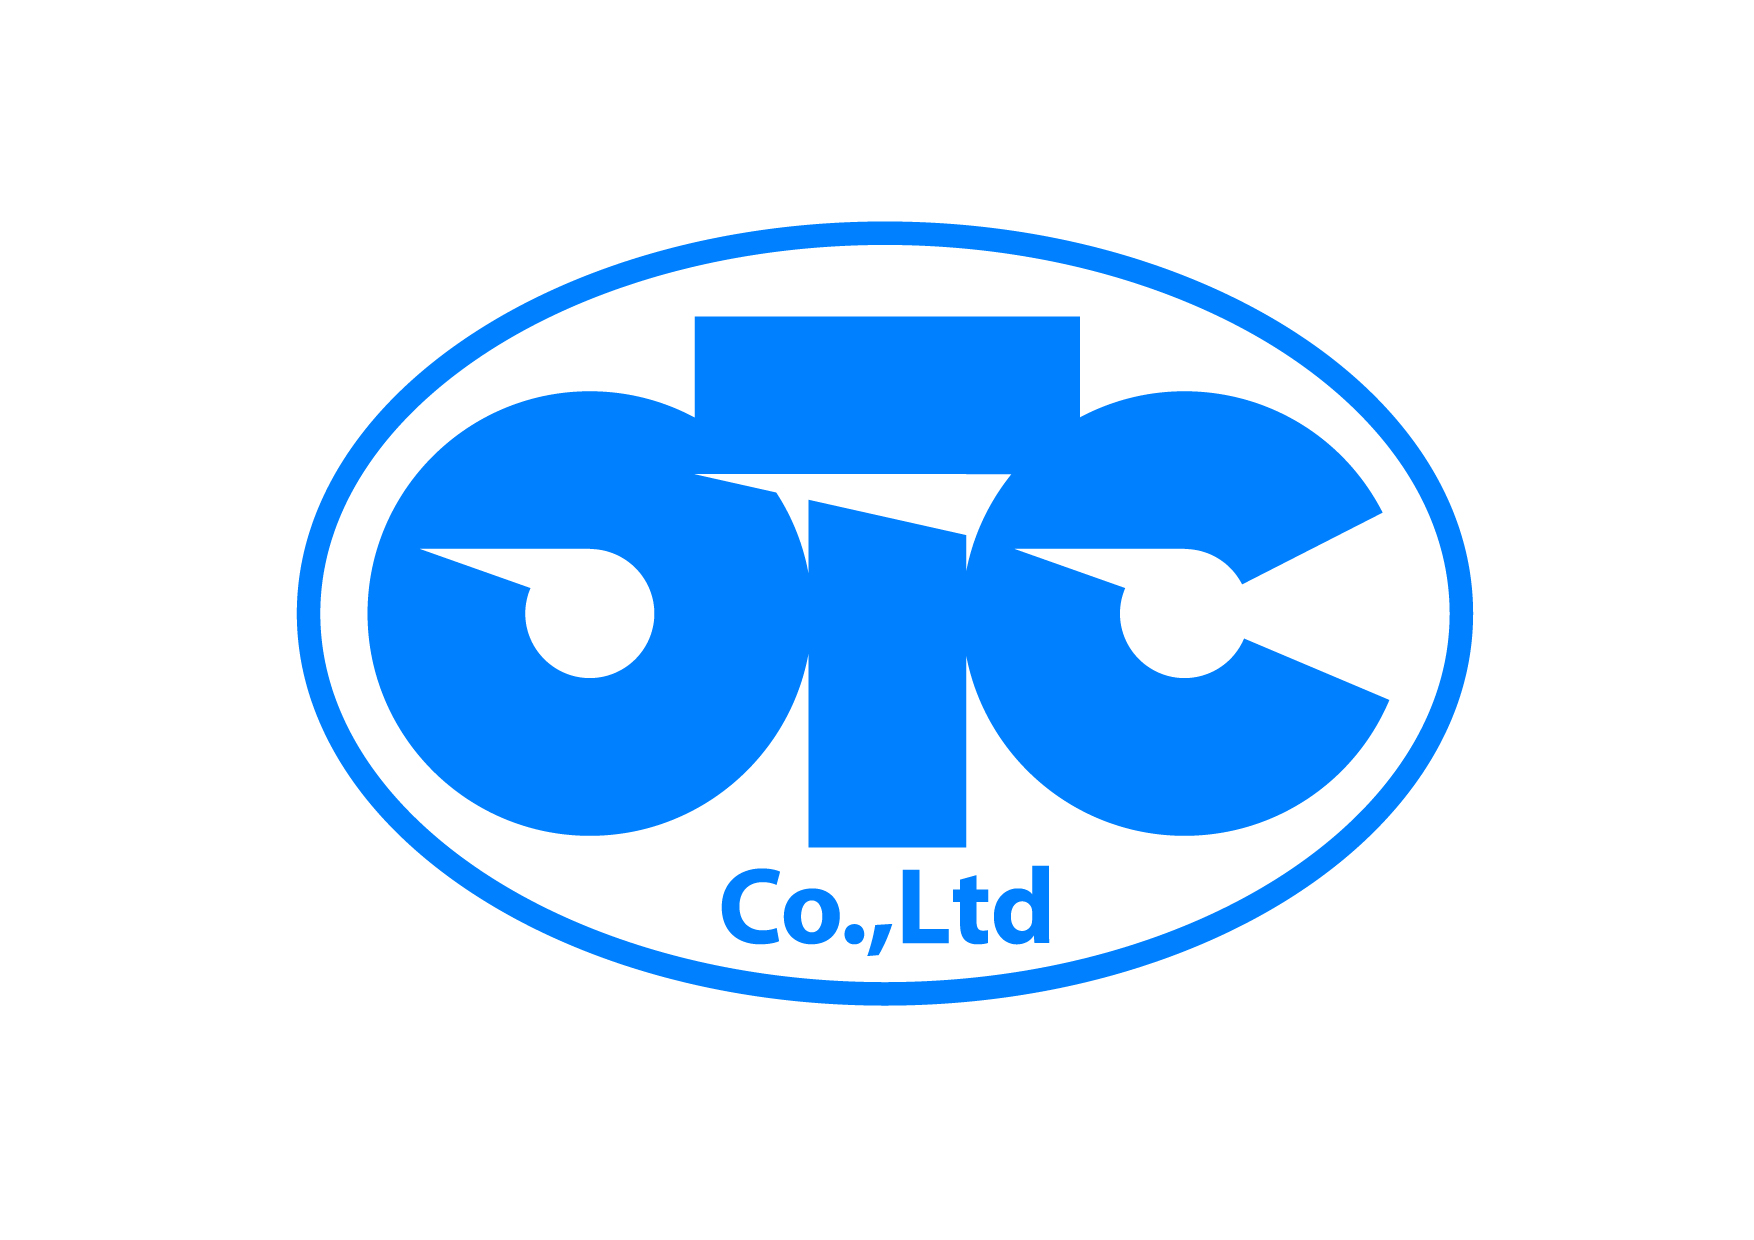 OTC Logo - Logo Design Contests » Unique Logo Design Wanted for OTC Co.,Ltd ...